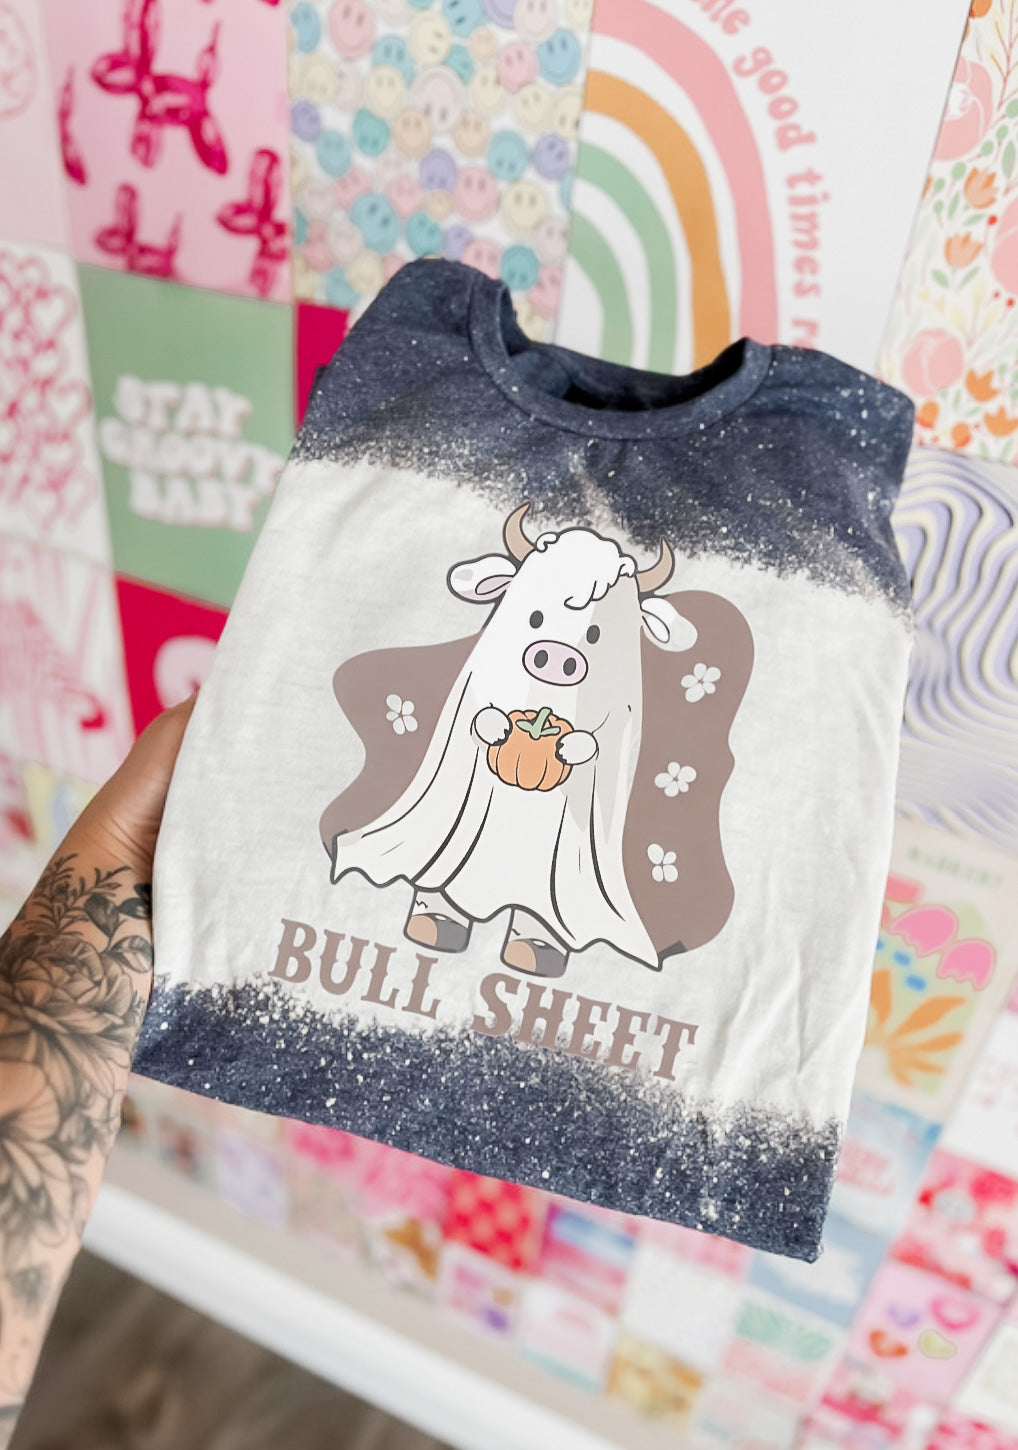 Bull sheet